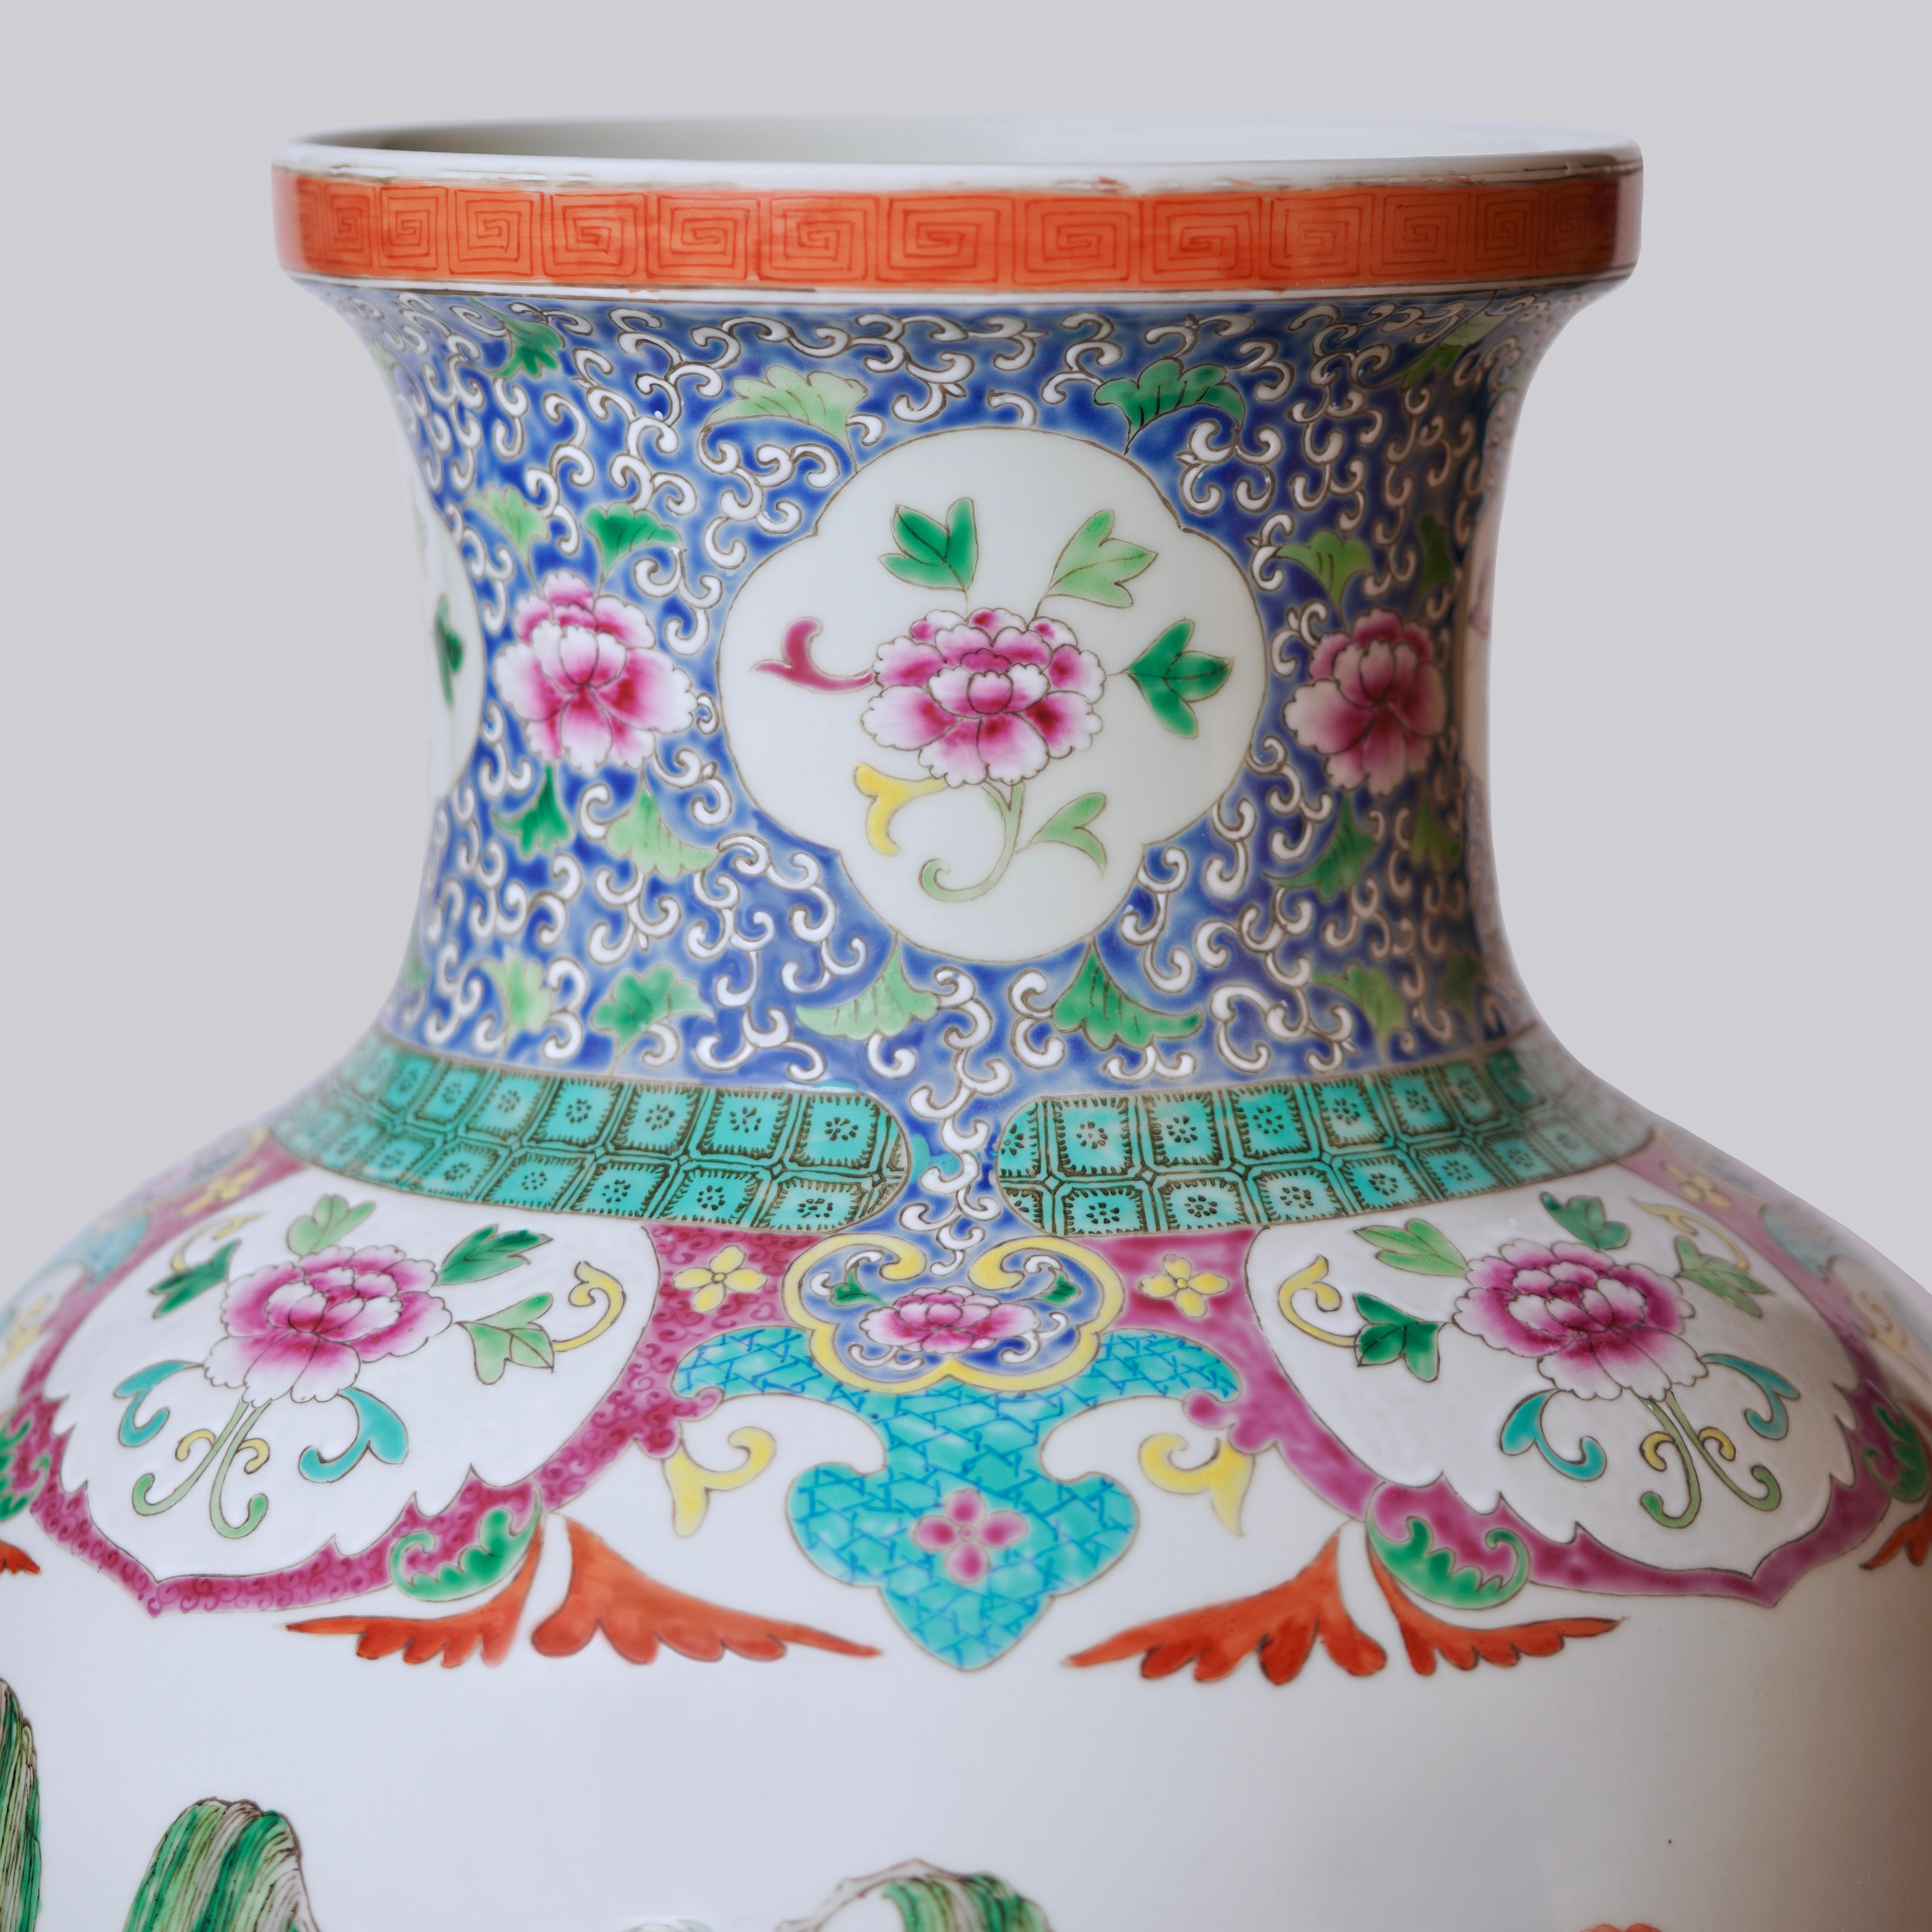 20th Century Unique Vintage Floral Landscape Famille Rose Porcelain Floor Vase For Sale